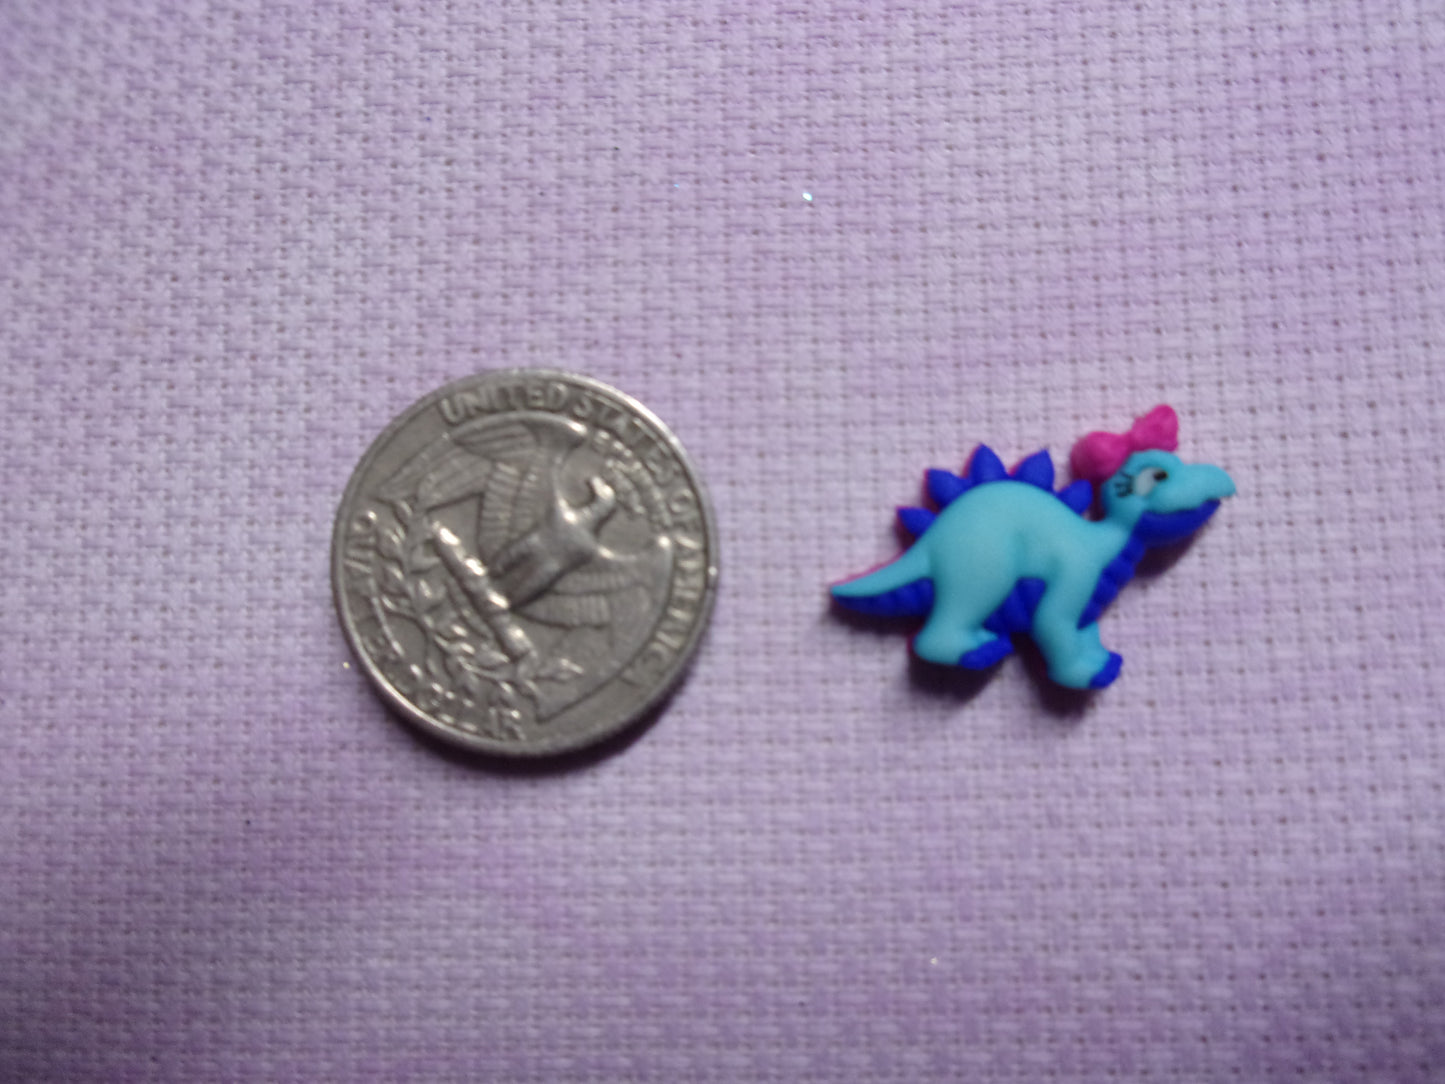 Baby Dinosaurs needle minders